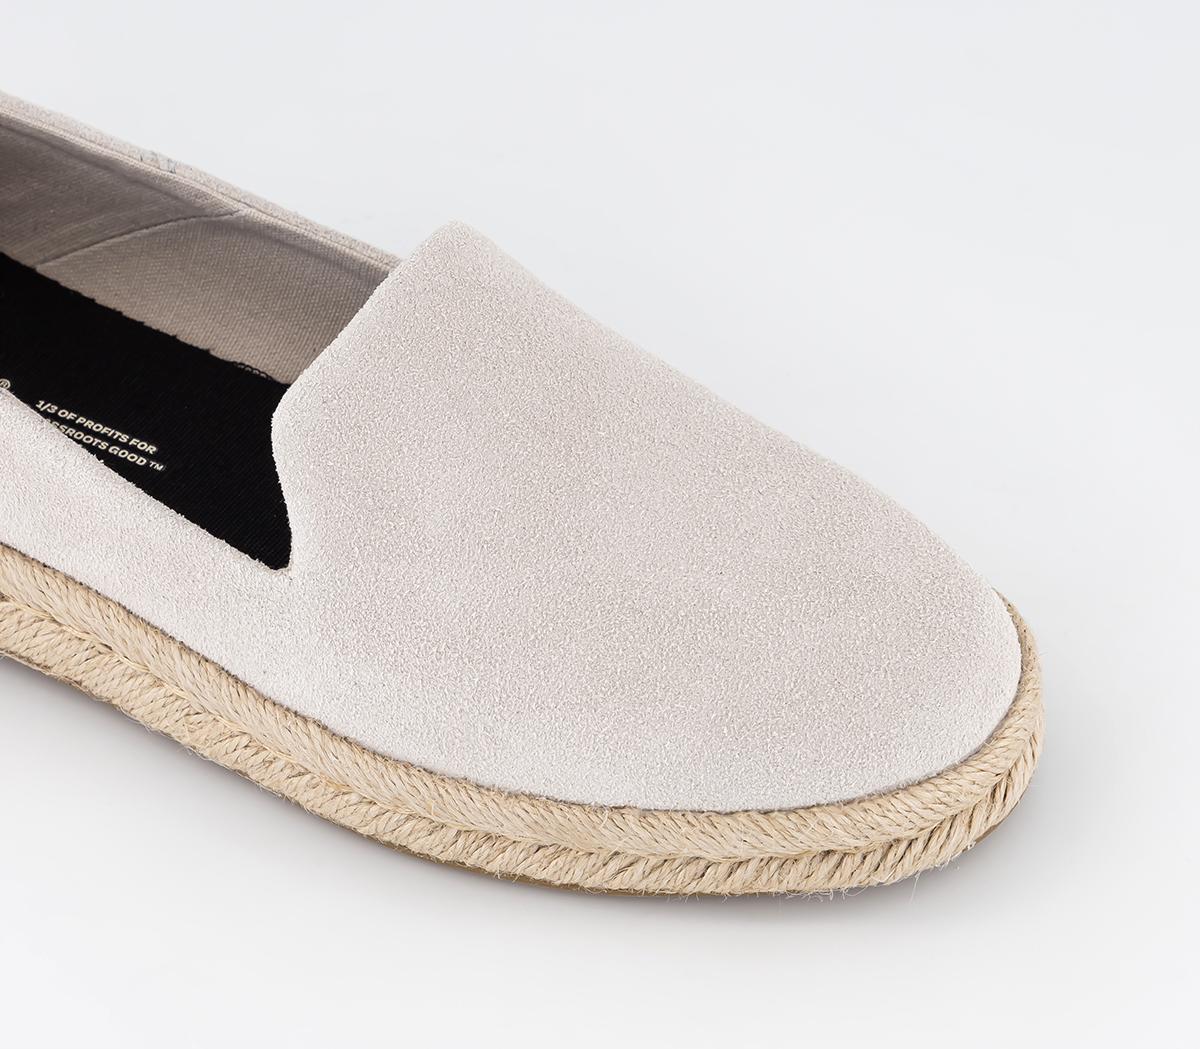 TOMS Santiago Espadrilles Putty Suede - Flat Shoes for Women